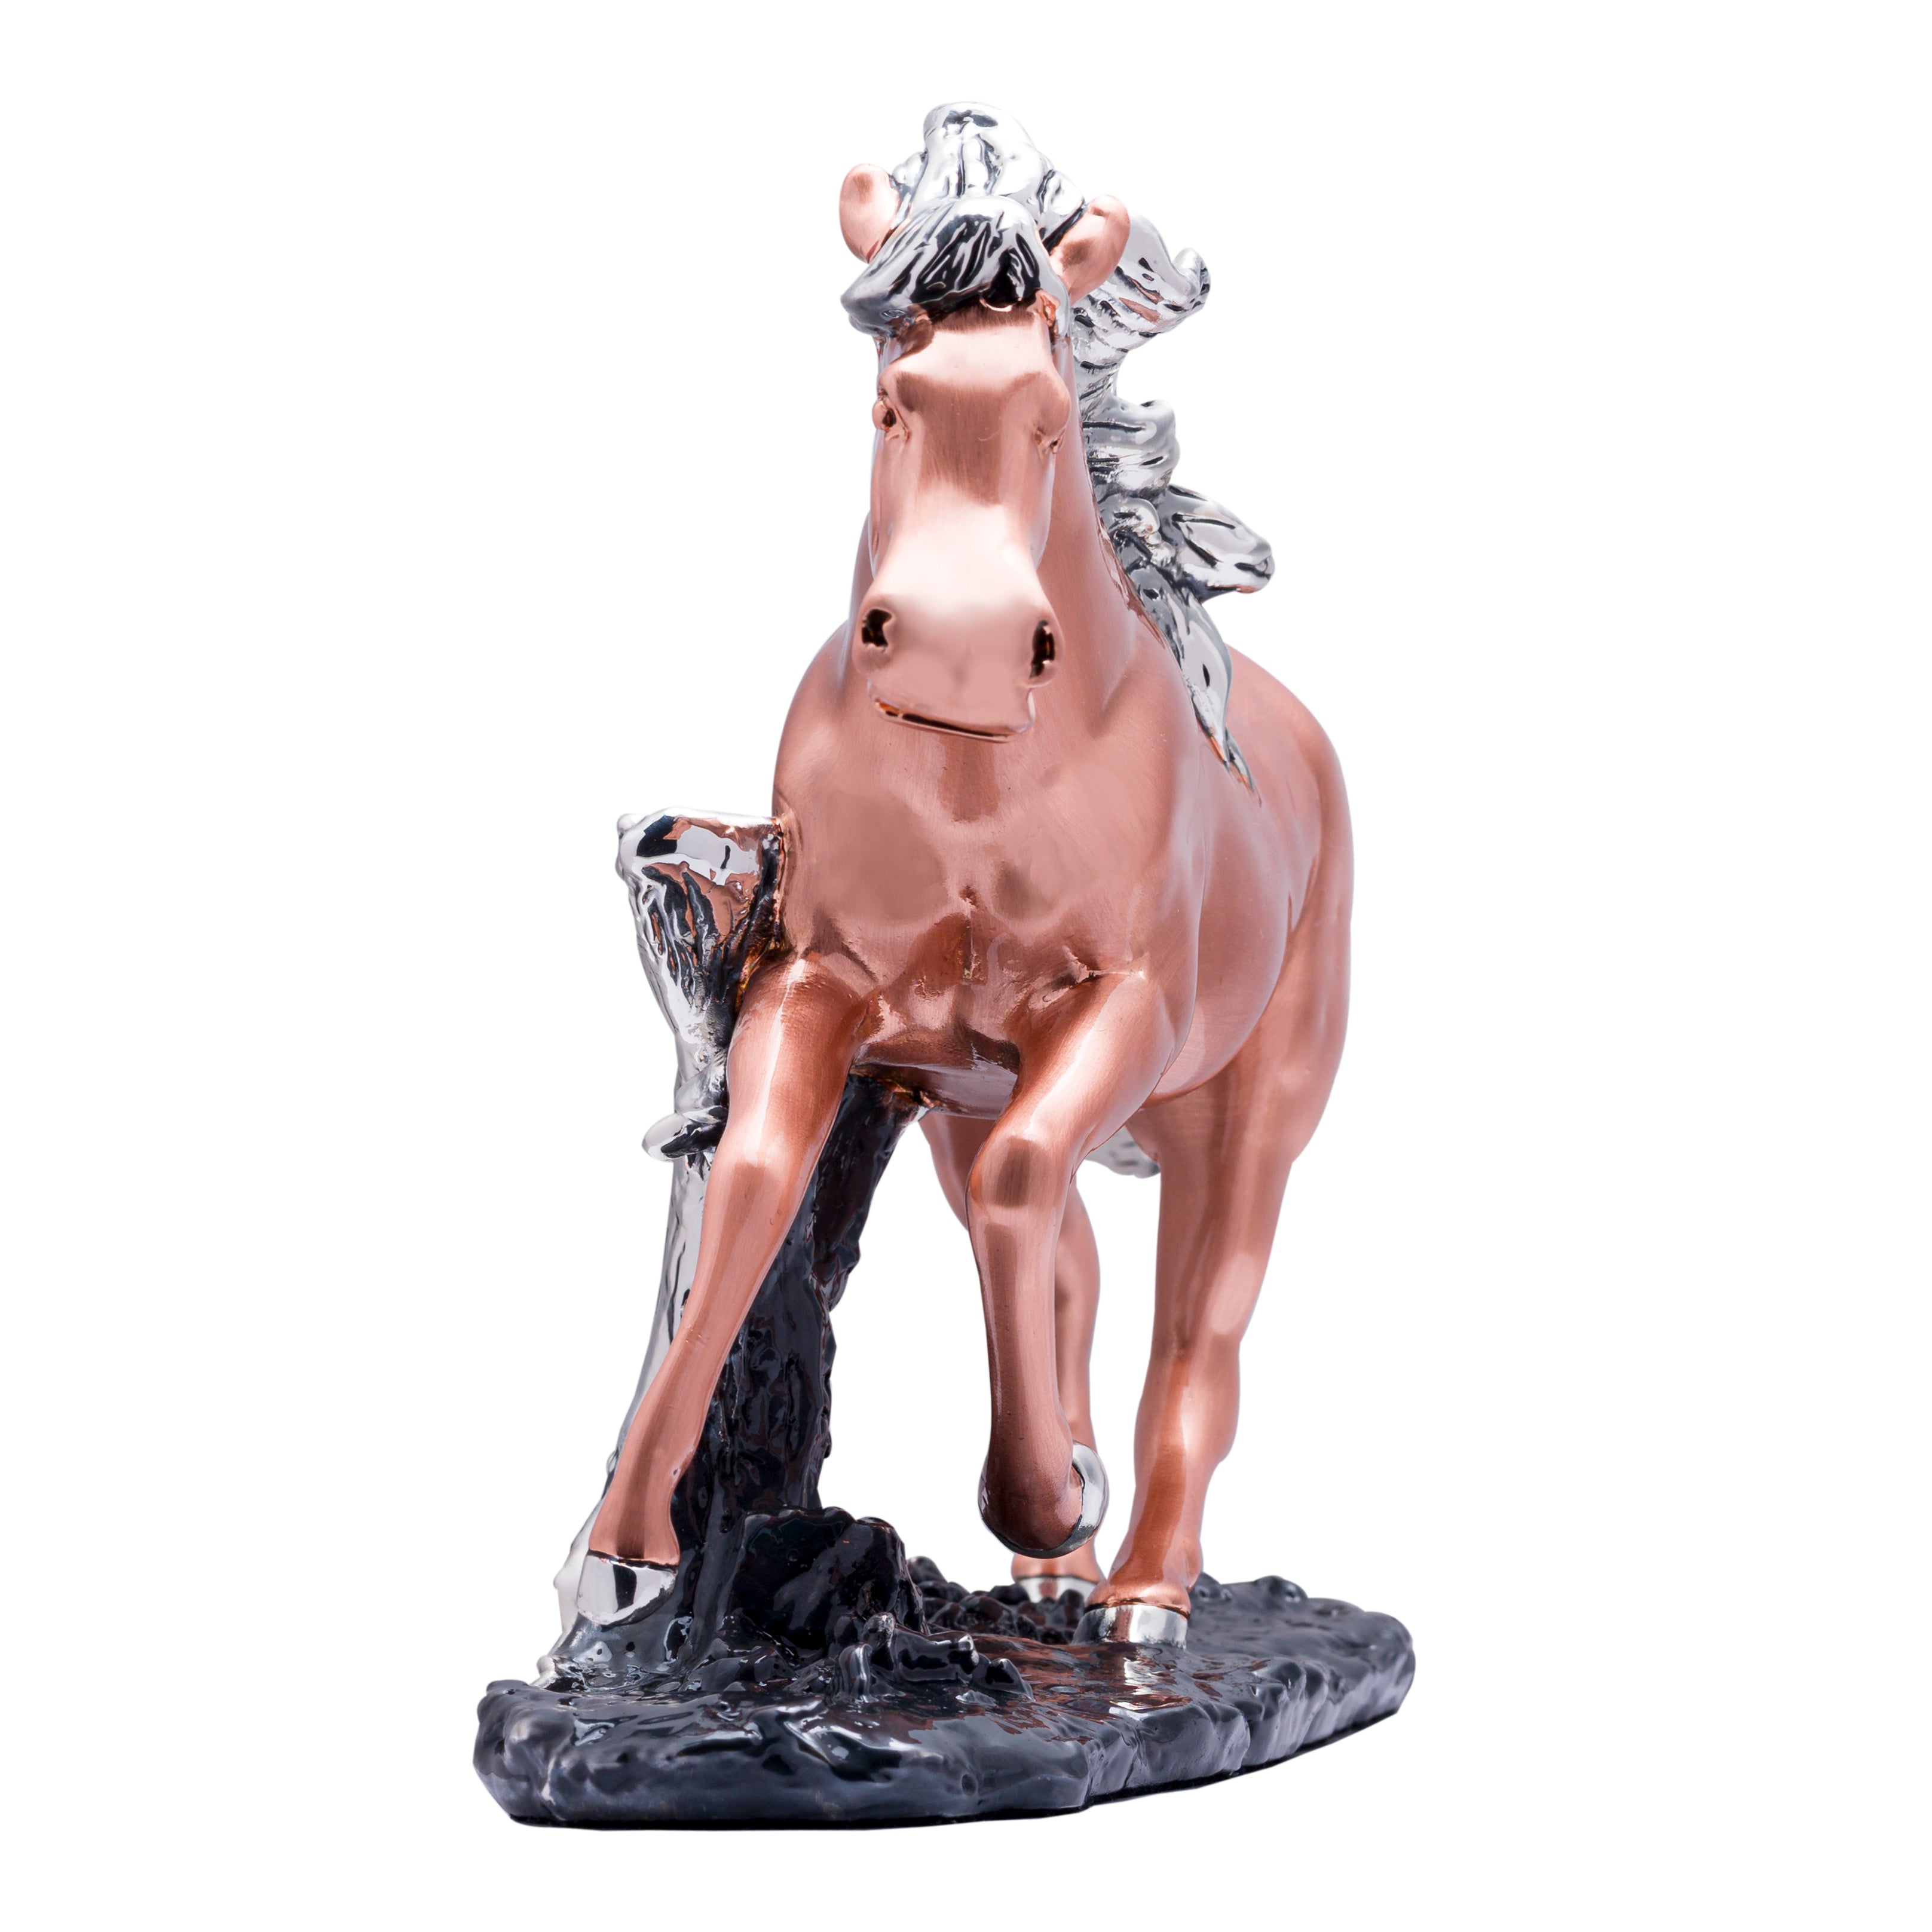 SU.SOT.A090 - Silver and Copper Running Horse Sculpture